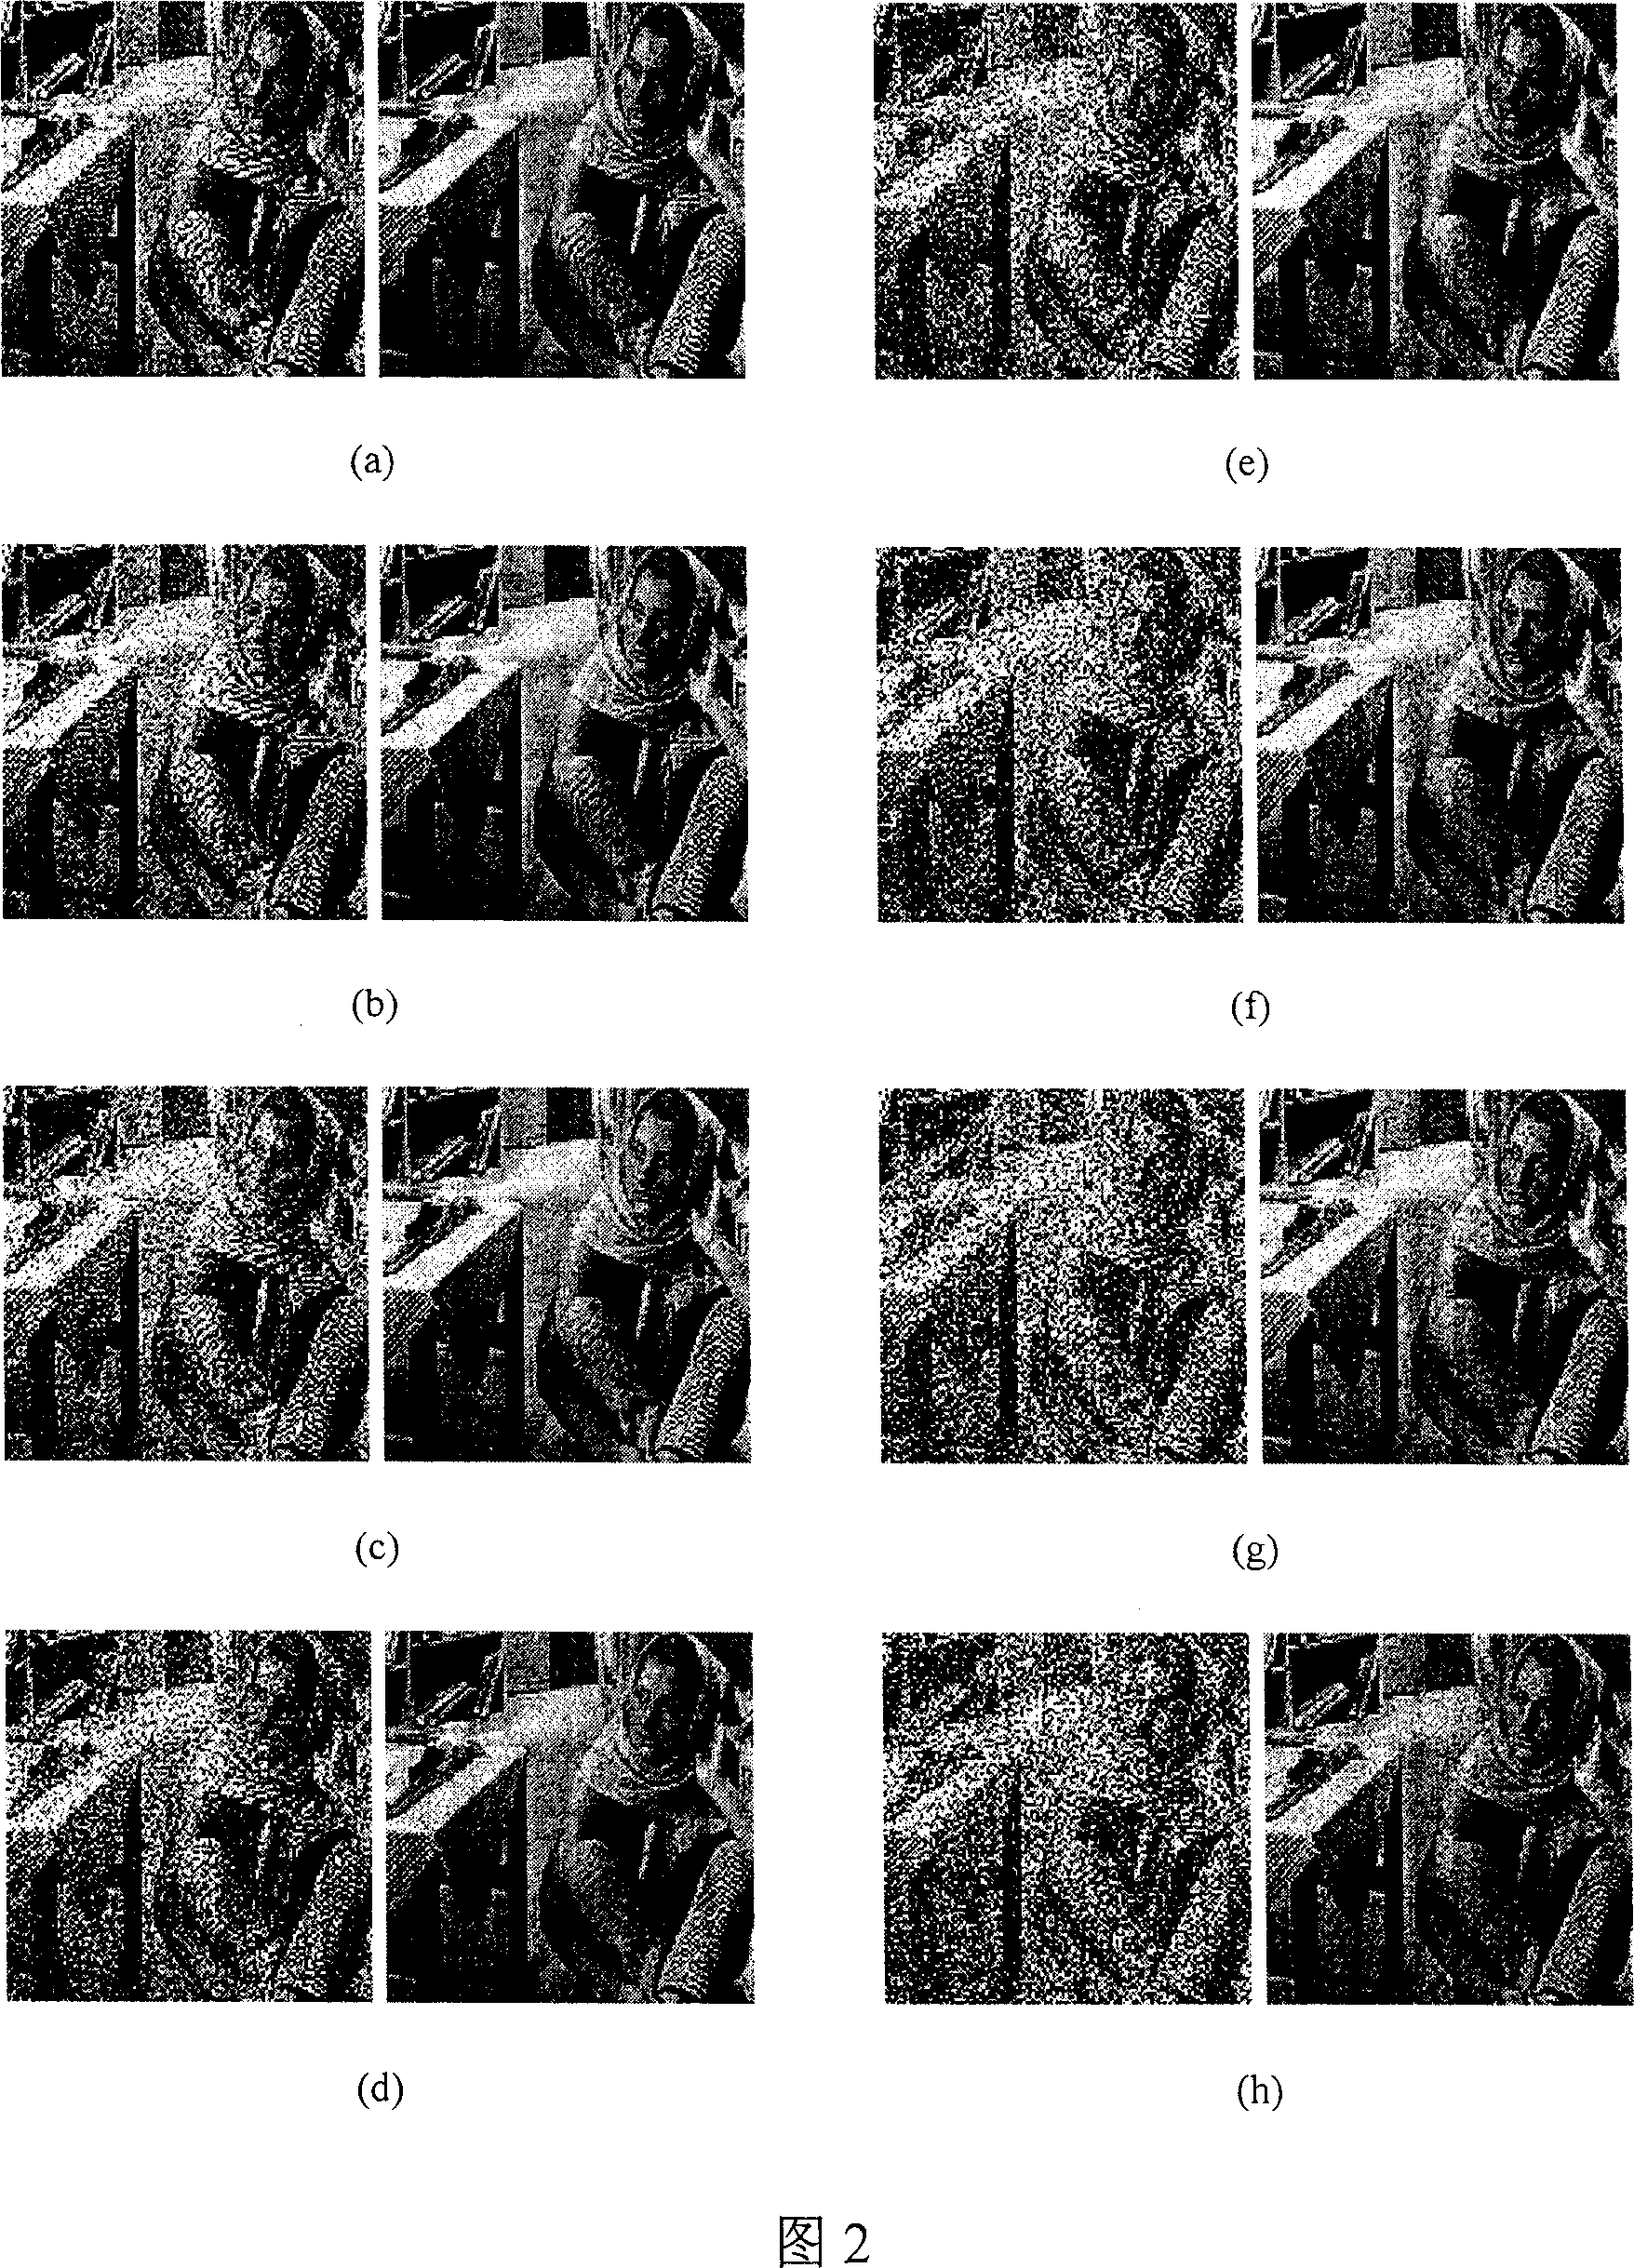 Image noise reducing method for Contourlet transform